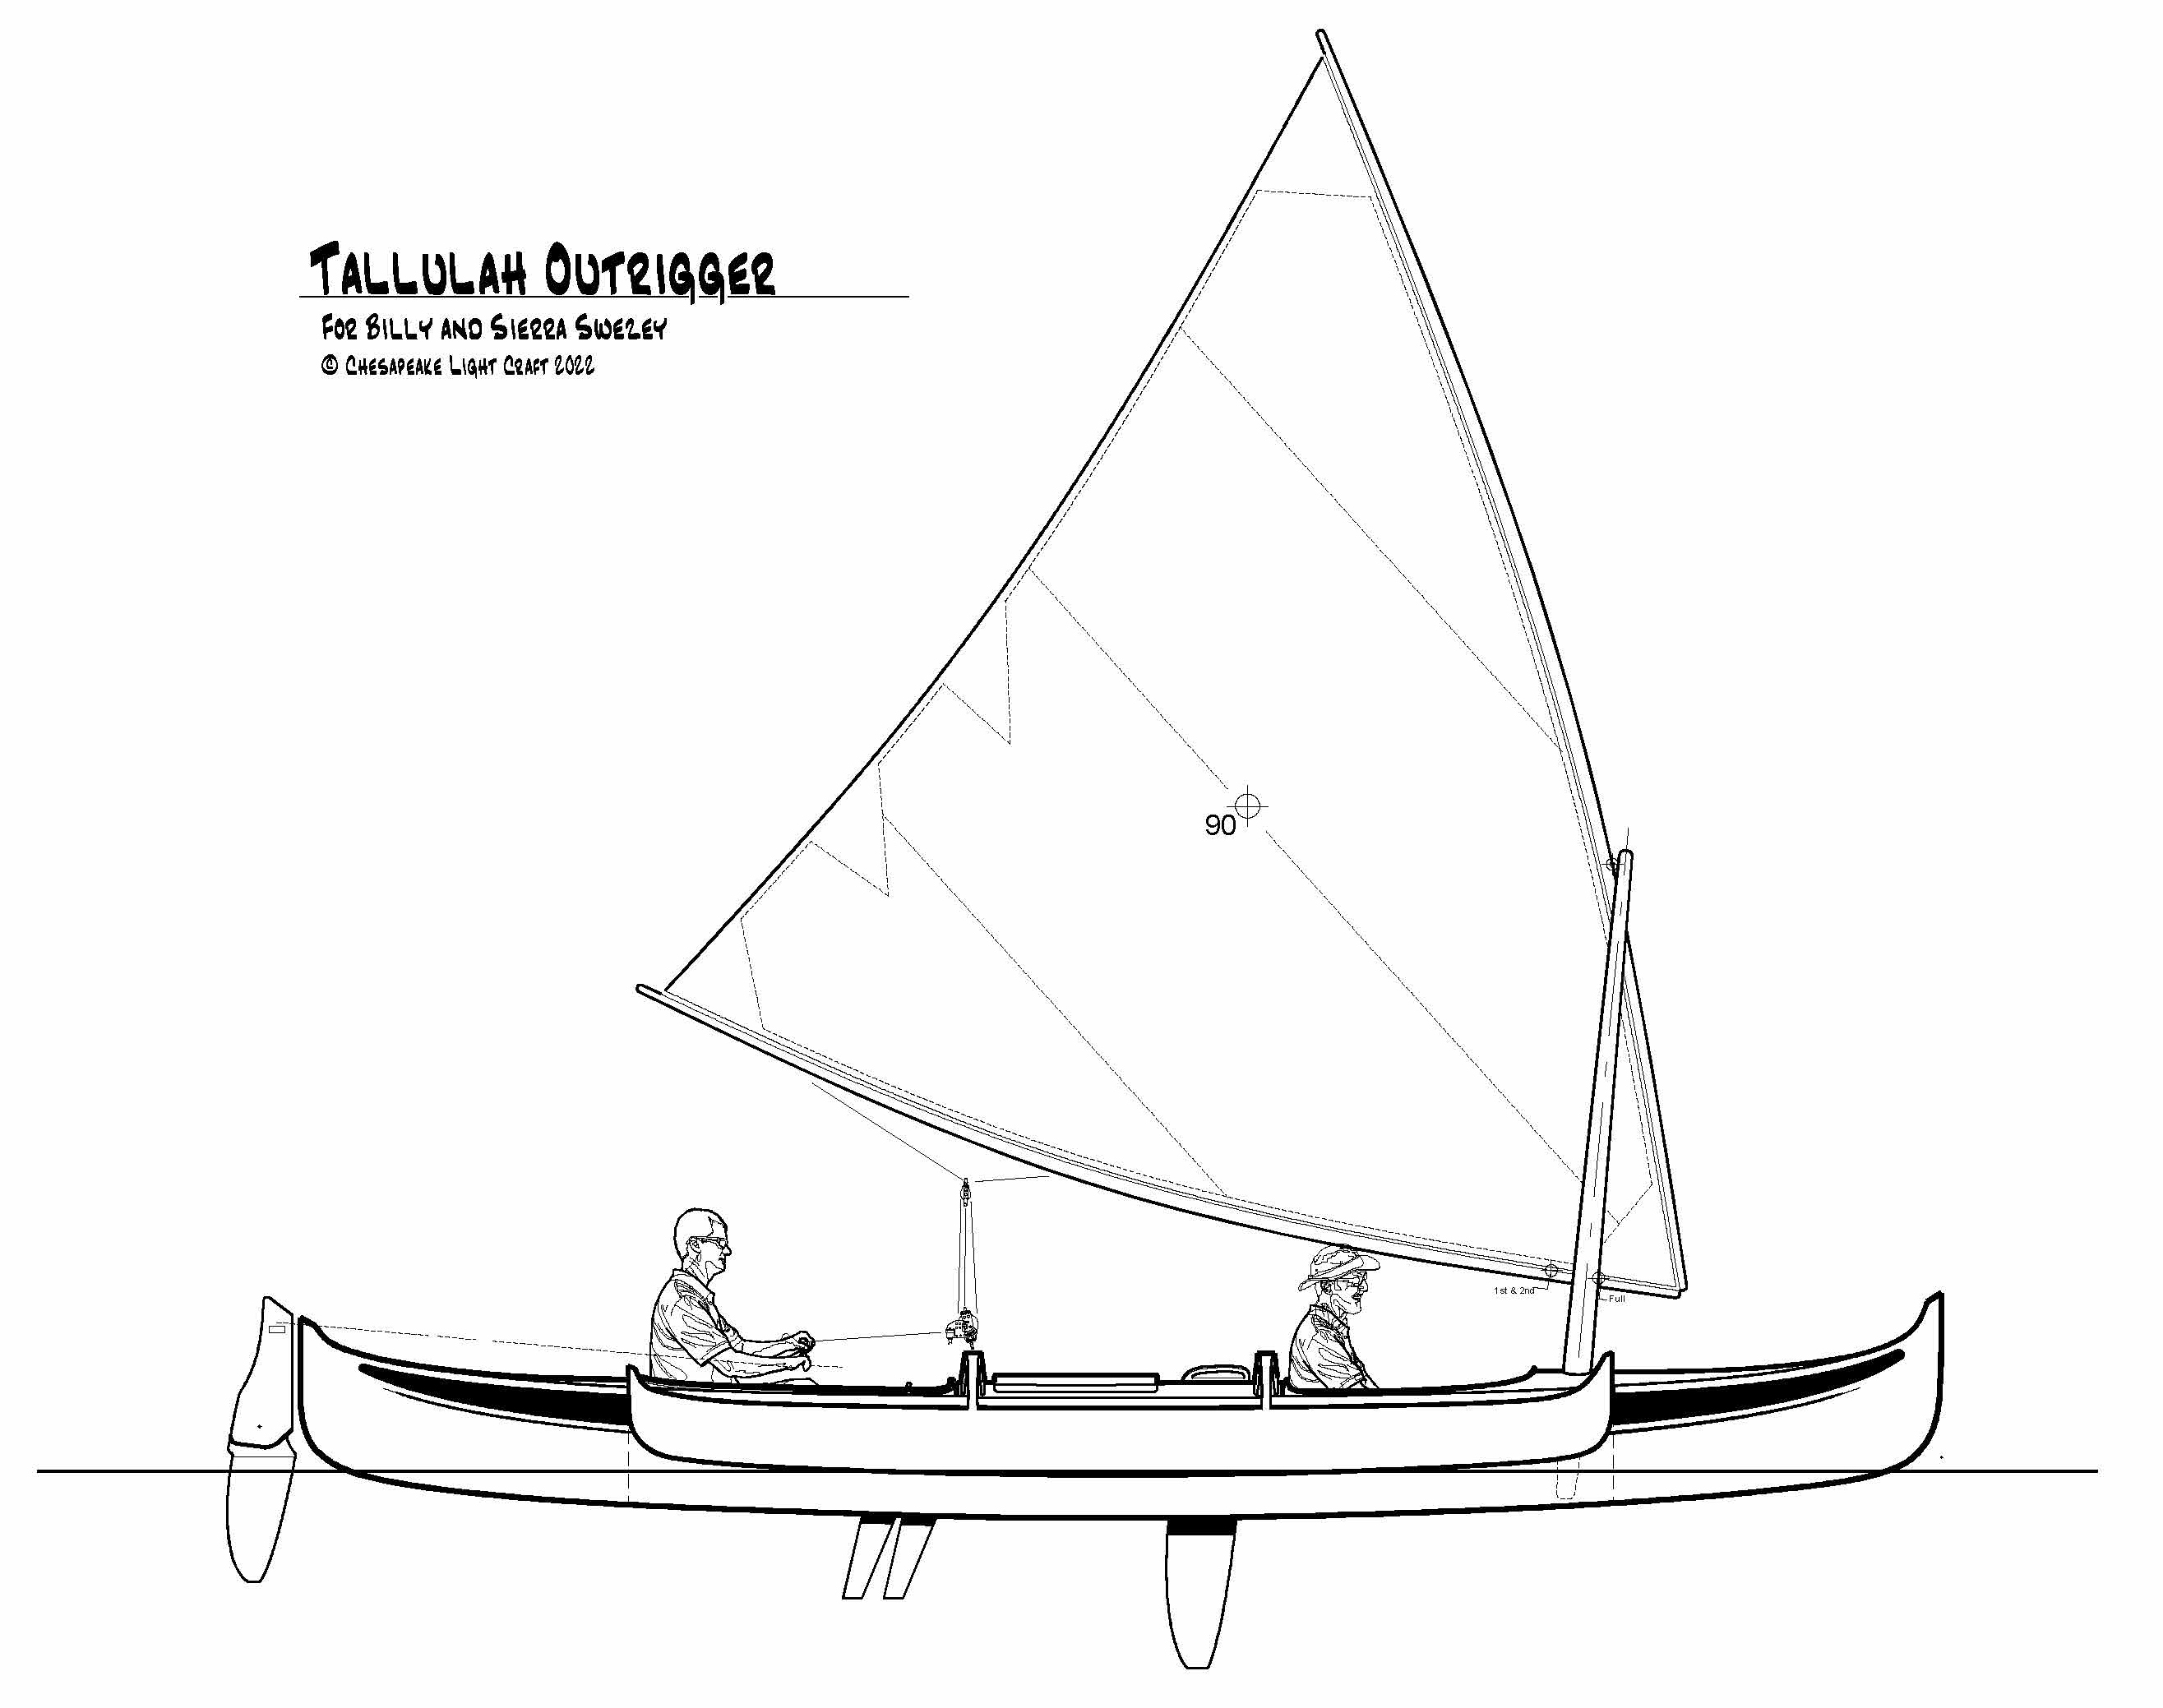 Talulah Sailing Outrigger, a Lightweight Trimaran You Can Build by CLC